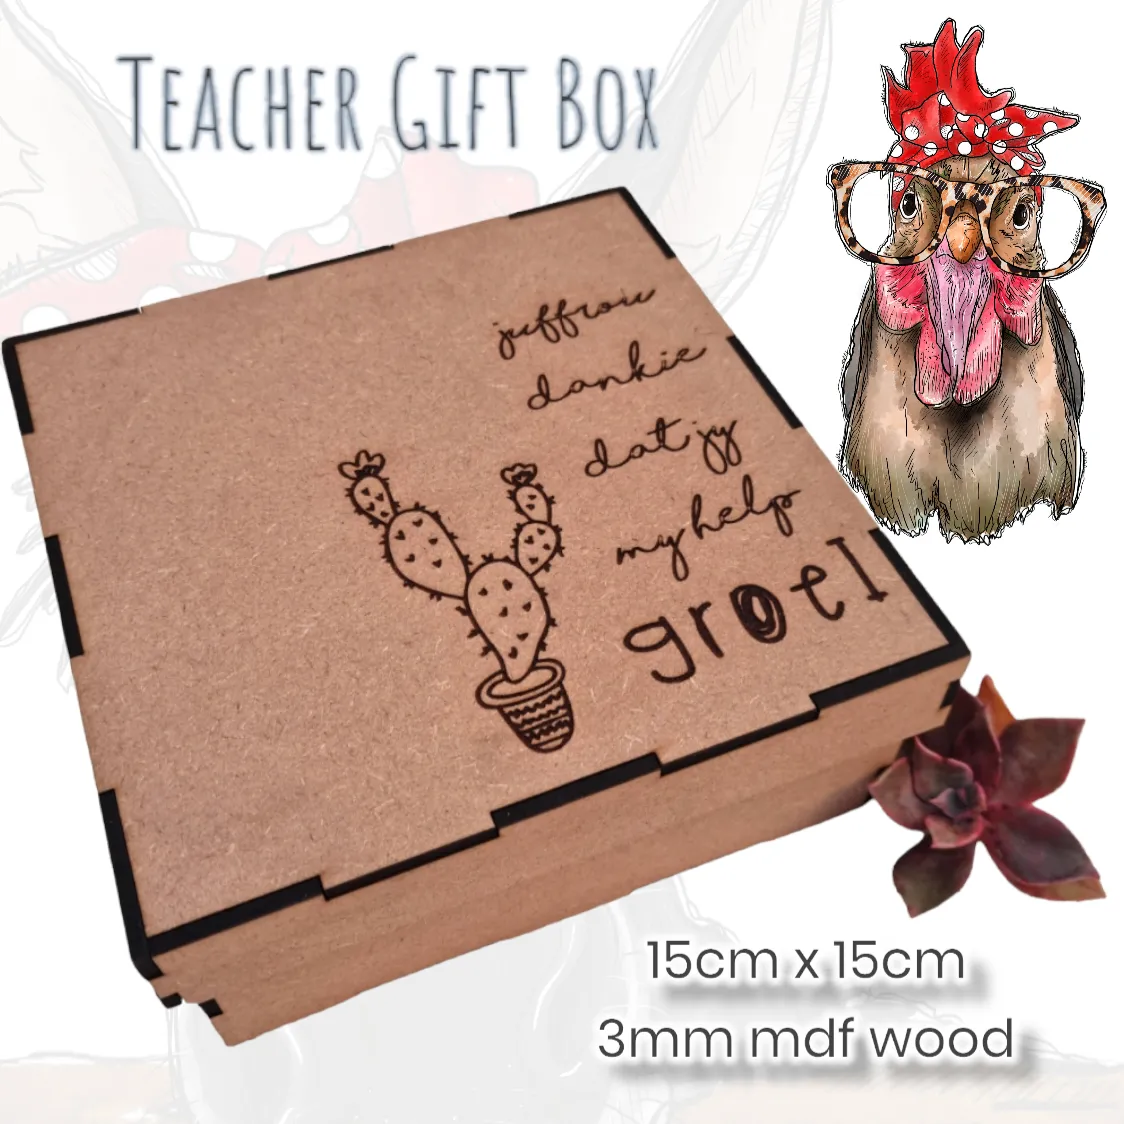 Teacher Gift Boxes - Various